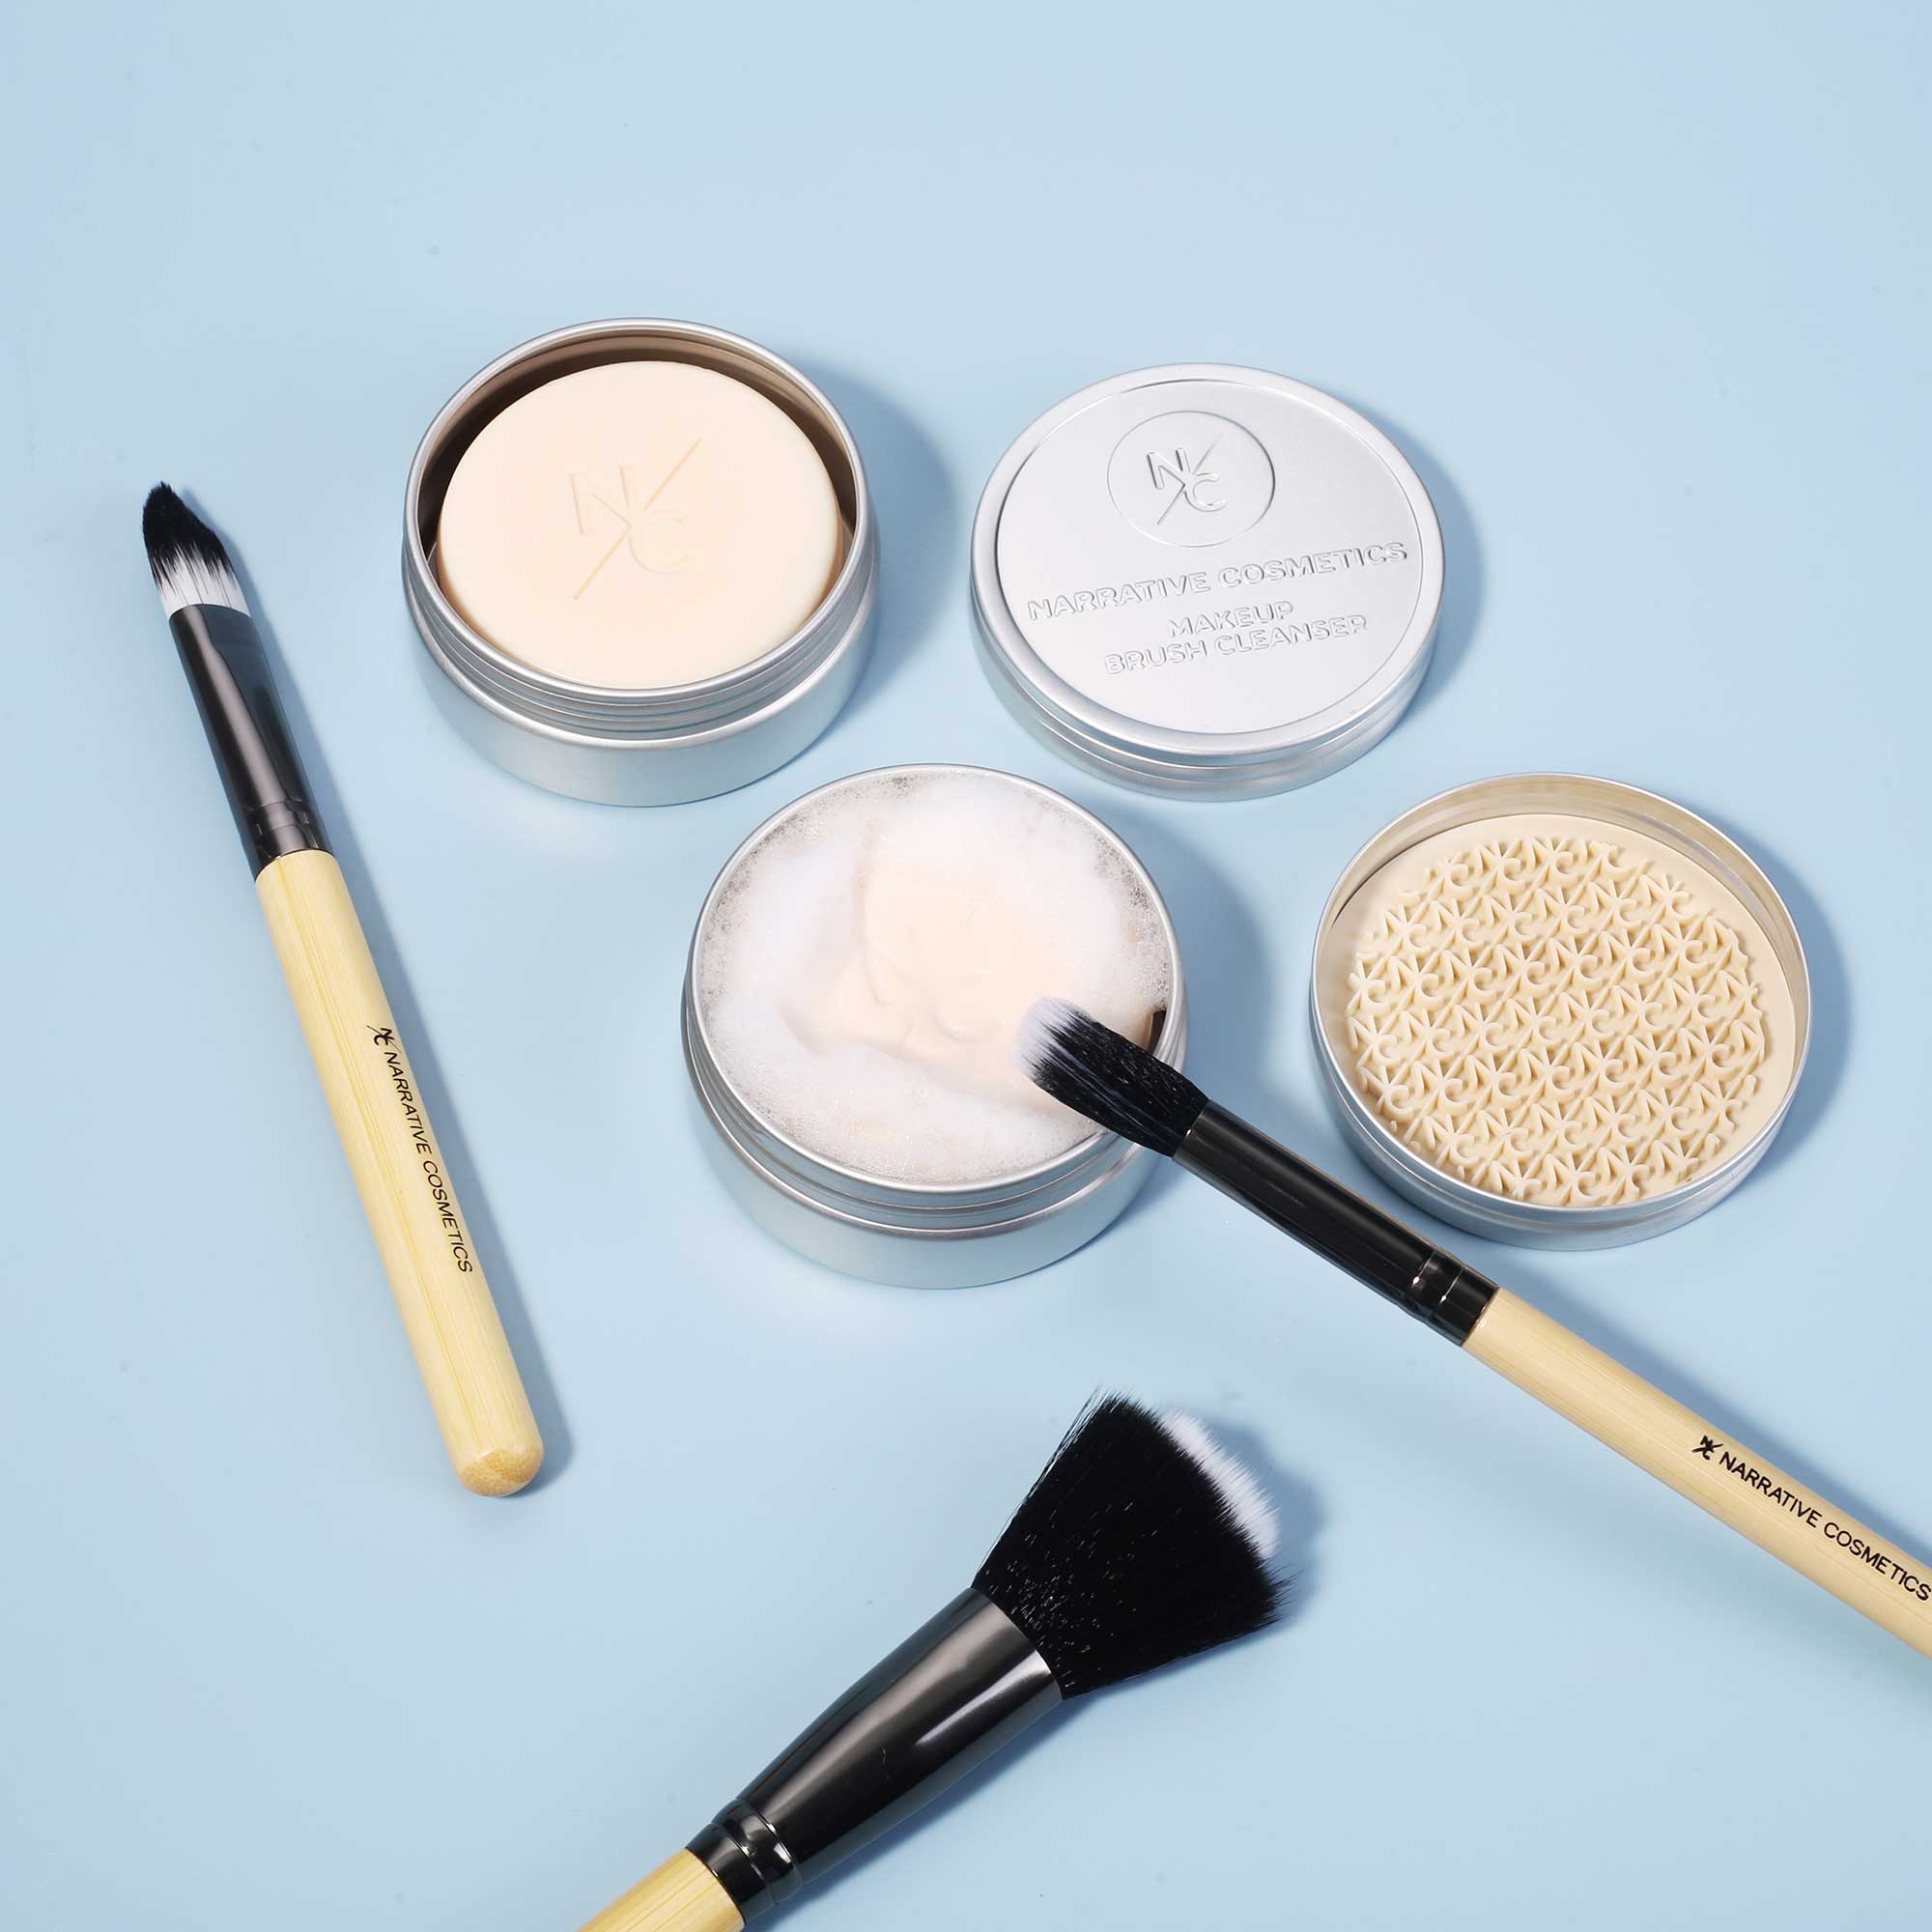 Brush Soap – MILI Cosmetics